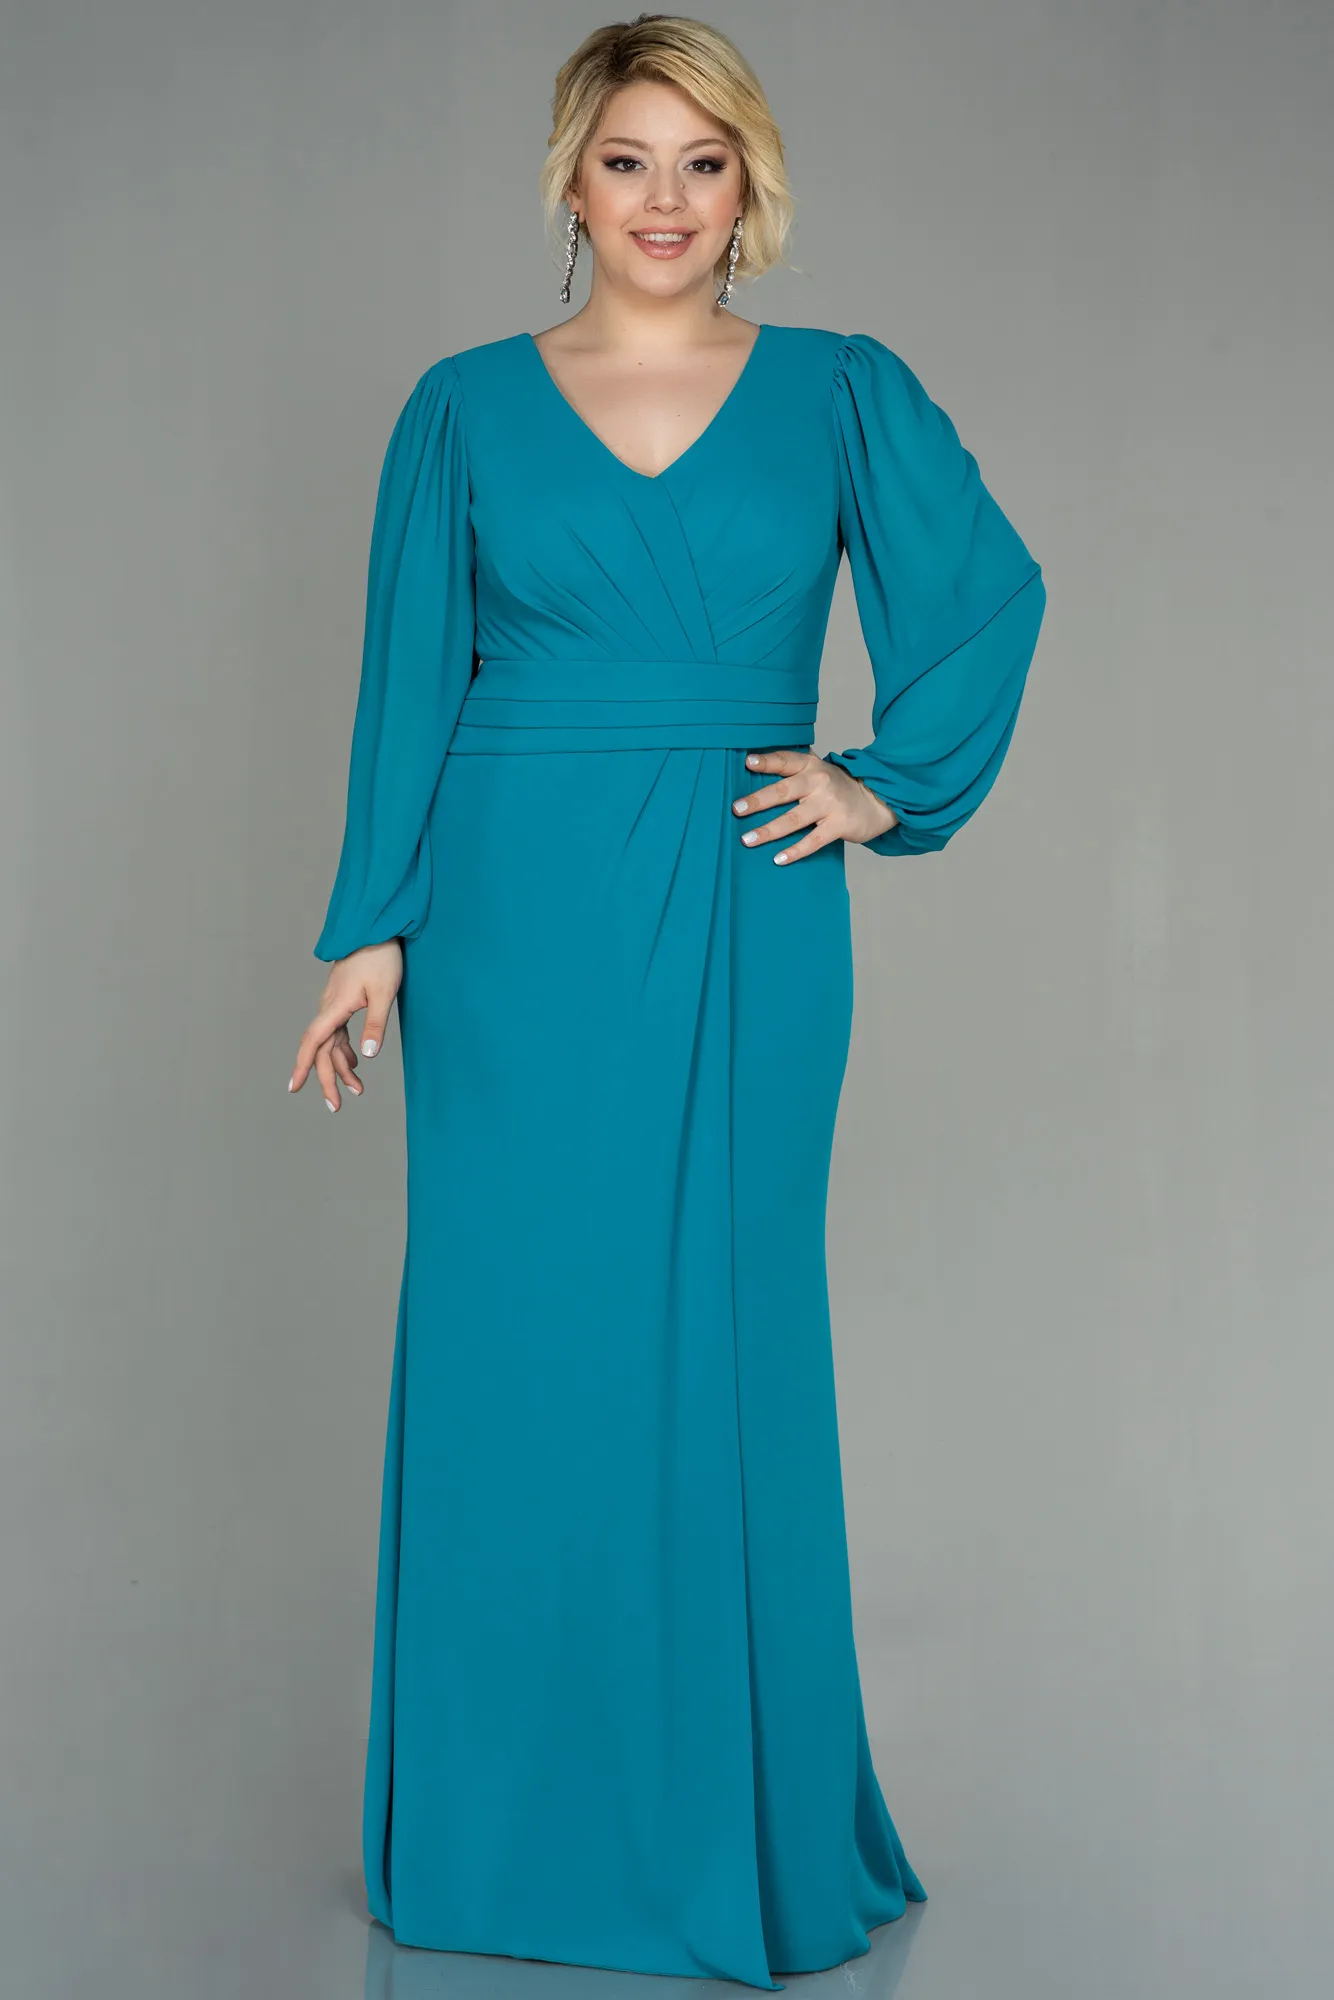 Oil Green-Long Chiffon Plus Size Evening Dress ABU2763